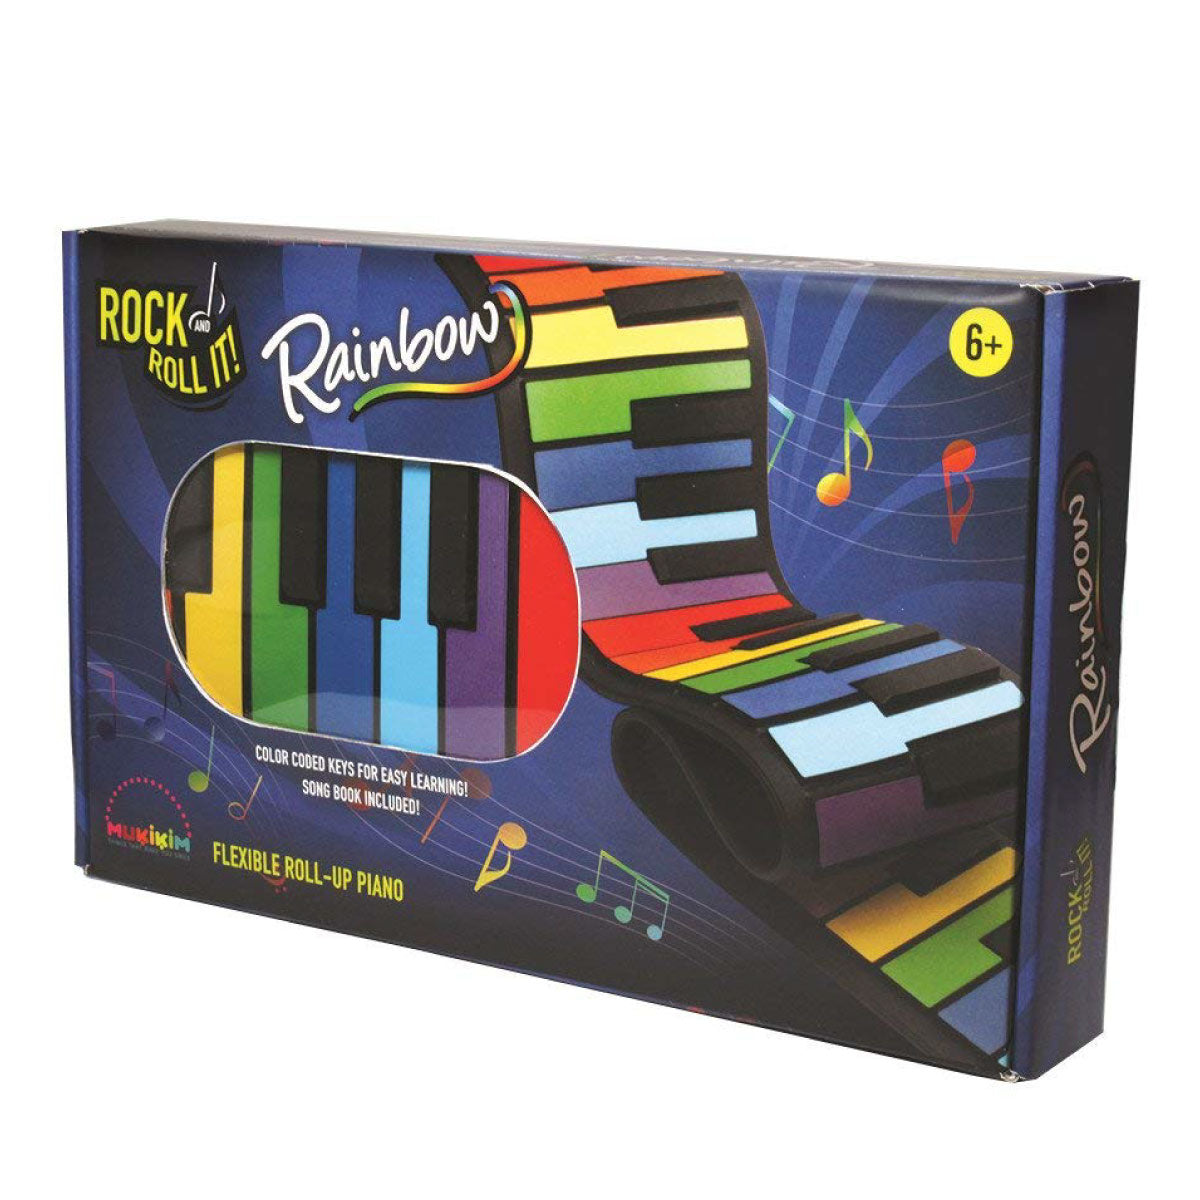 Rock N Roll It Rainbow Piano from Mukikim